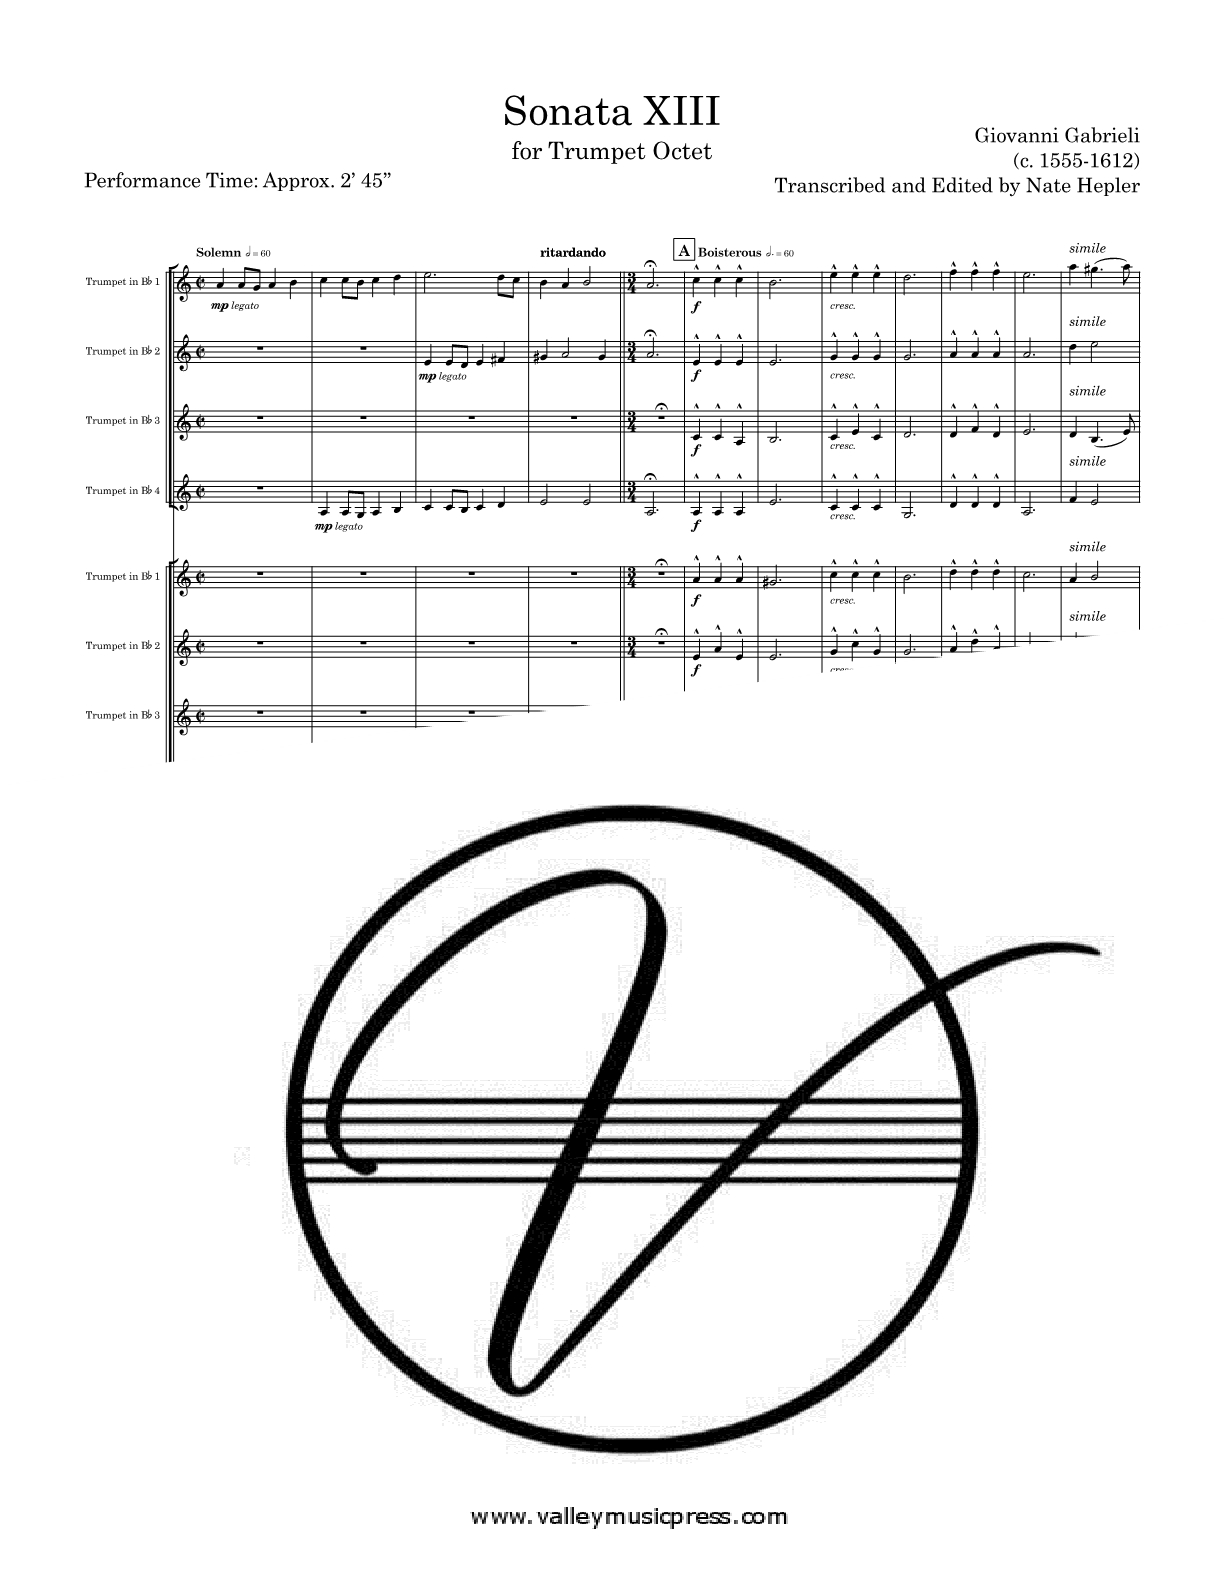 Gabrieli - Sonata XIII (Trumpet Octet)